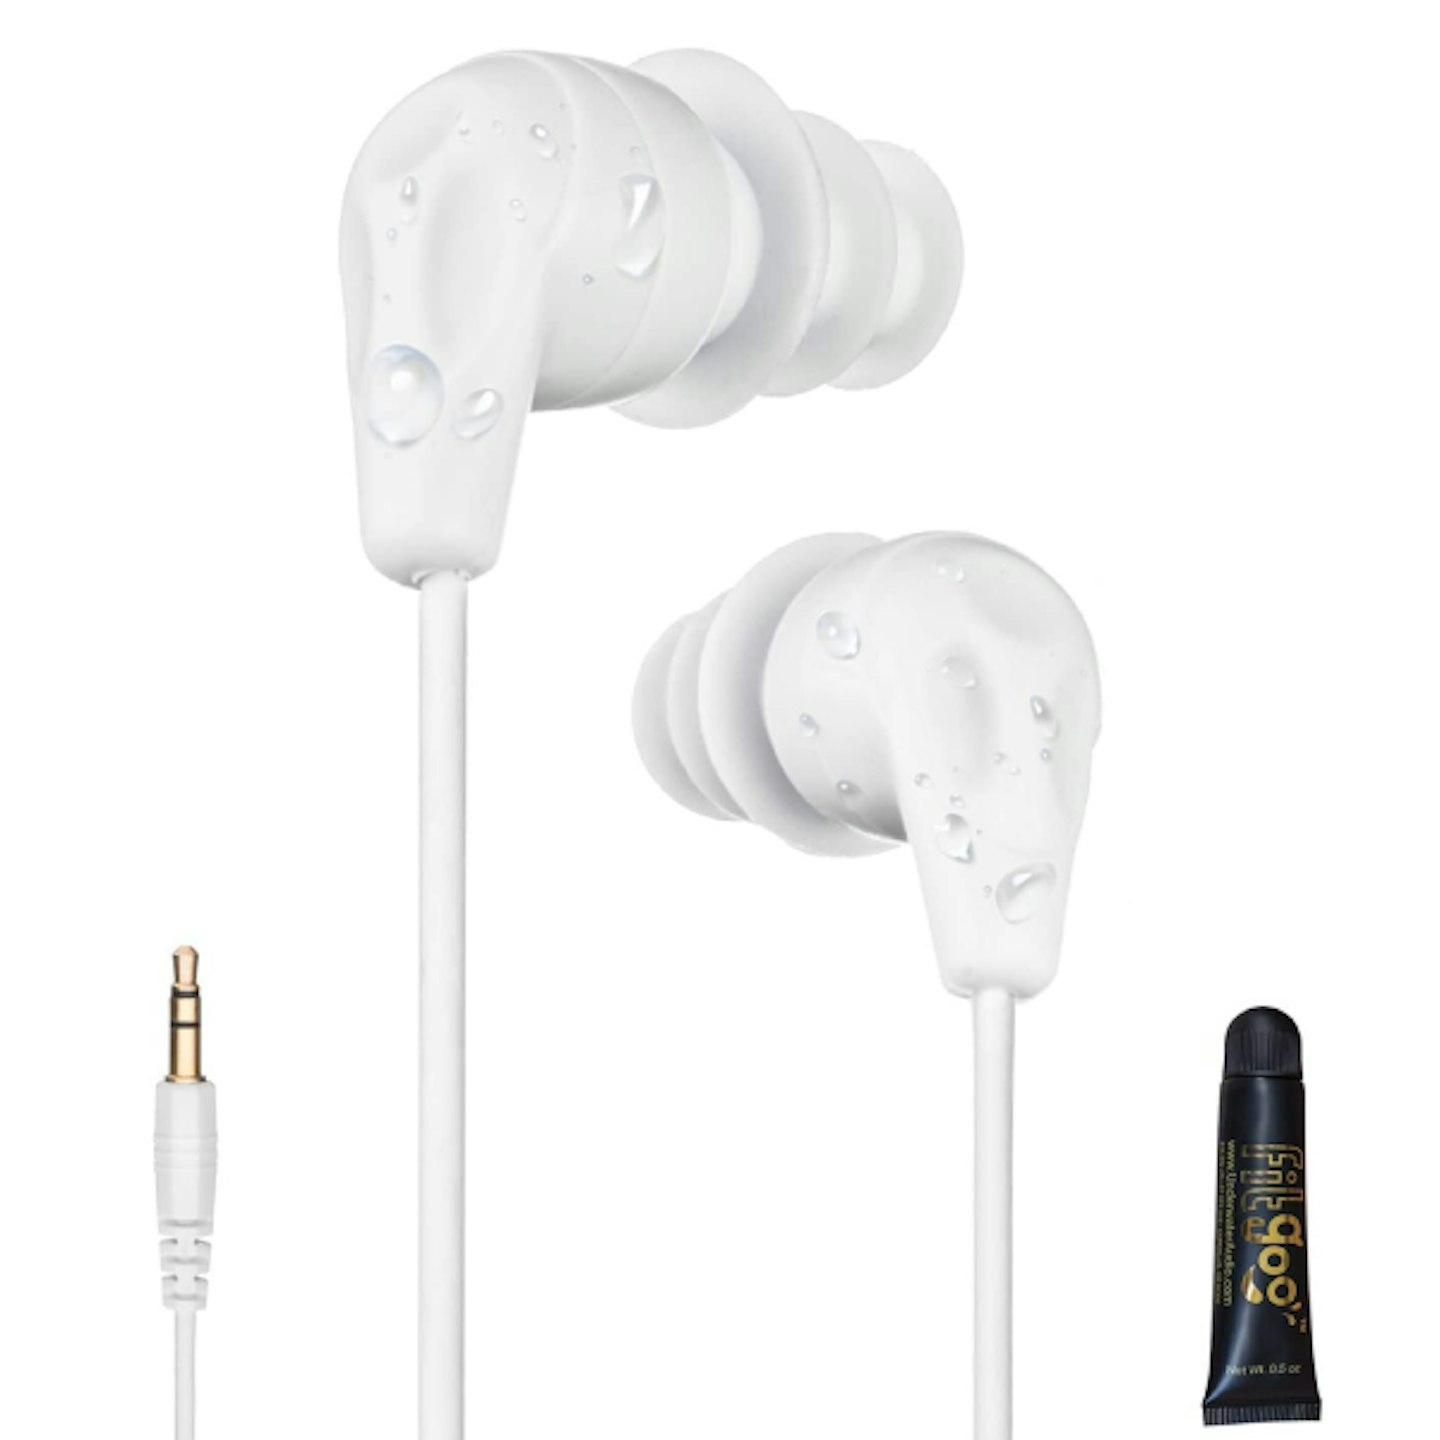 Swimbud earphones